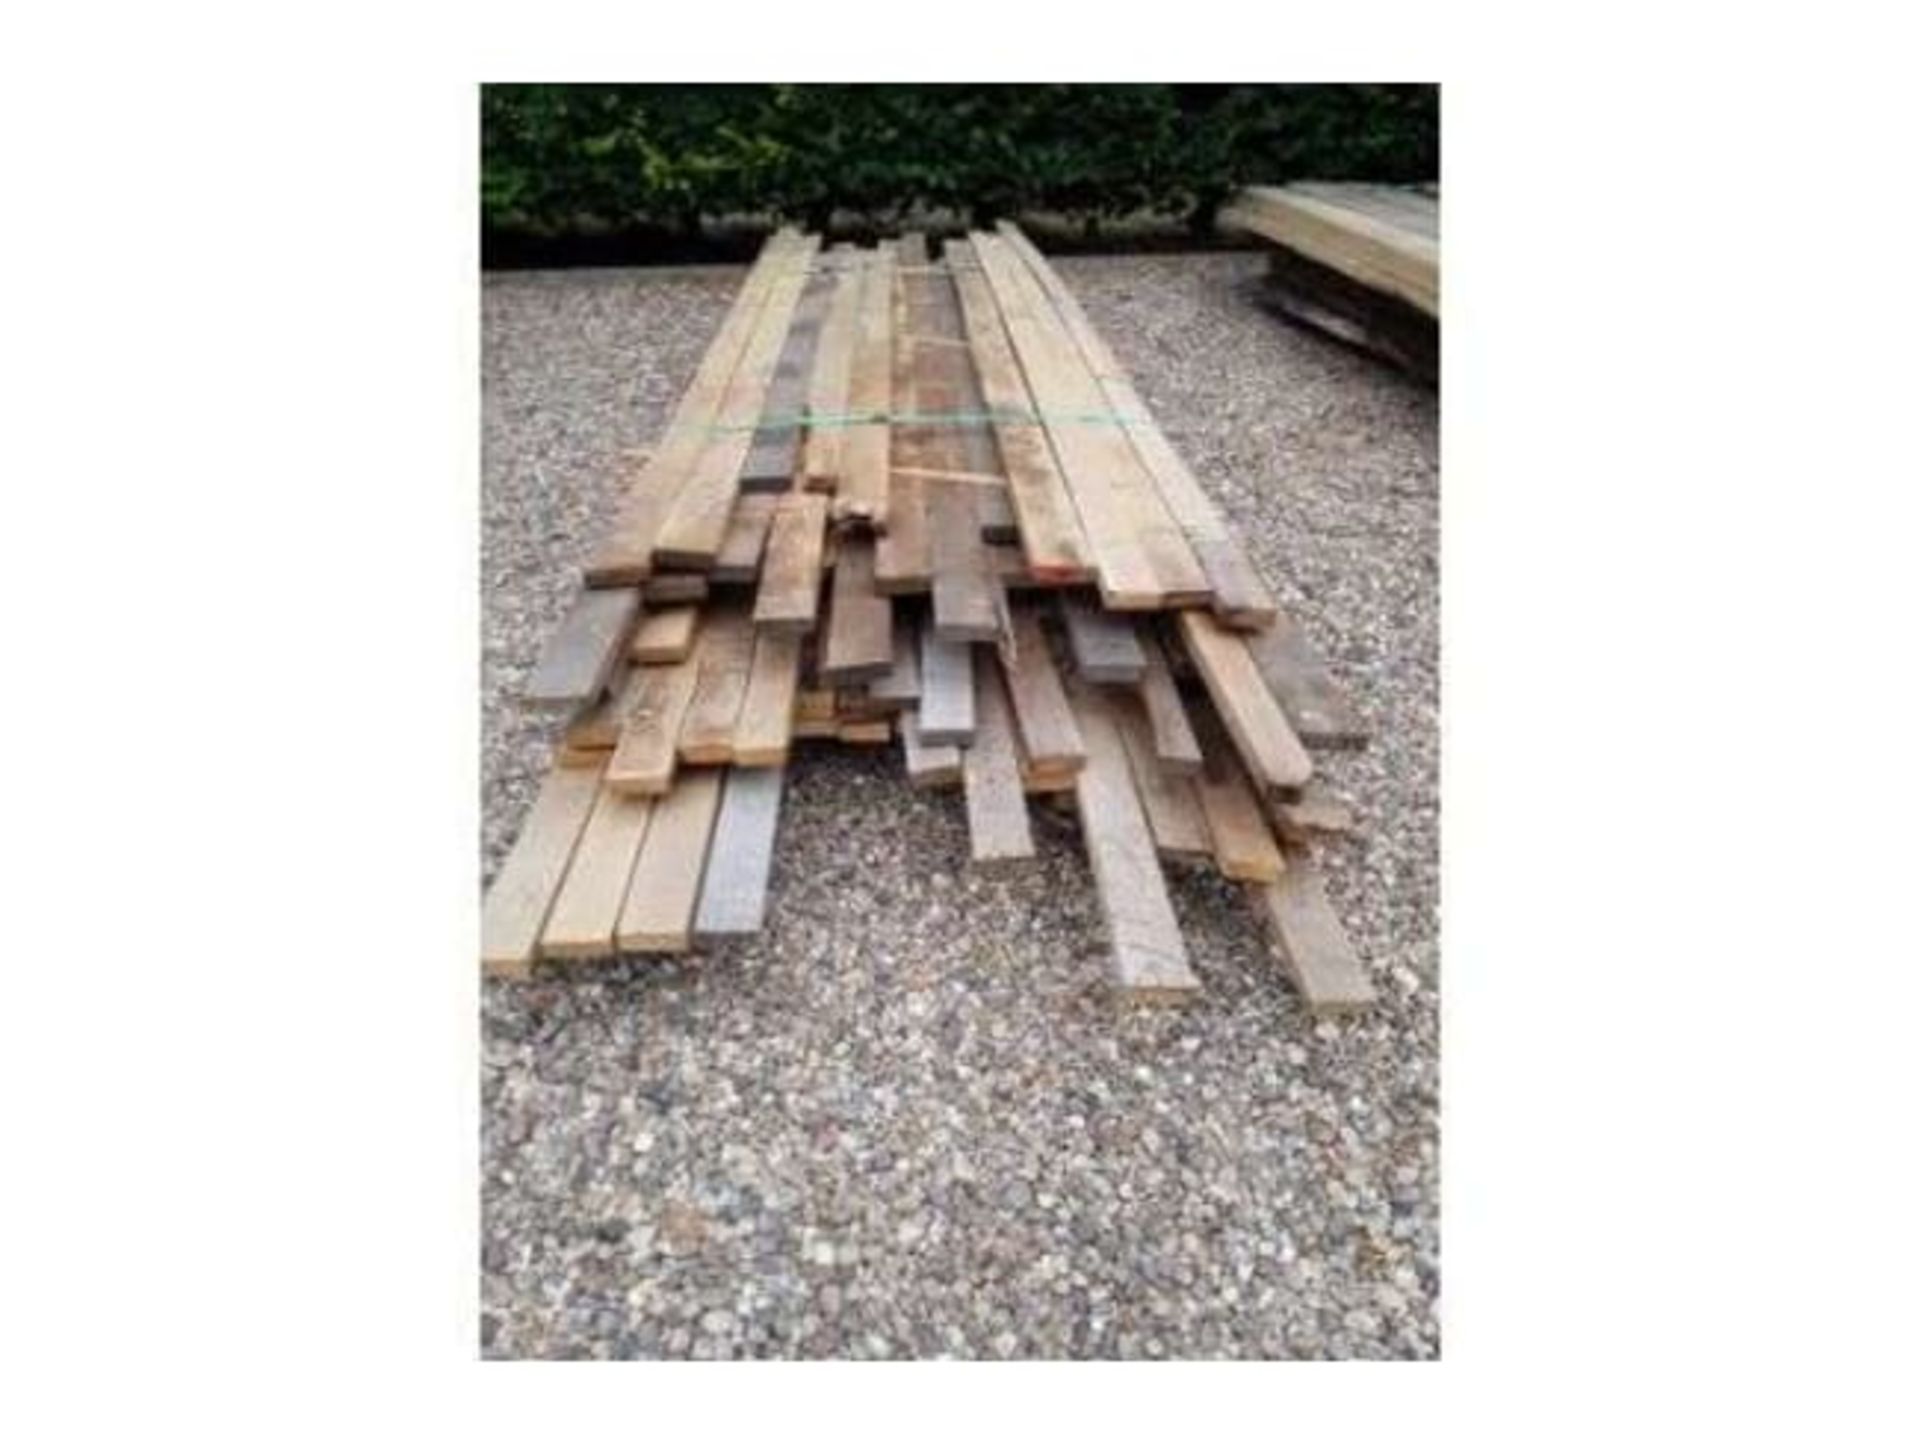 90 x Hardwood Air Dried Timber Sawn English Oak Boards / Rails - Image 3 of 3